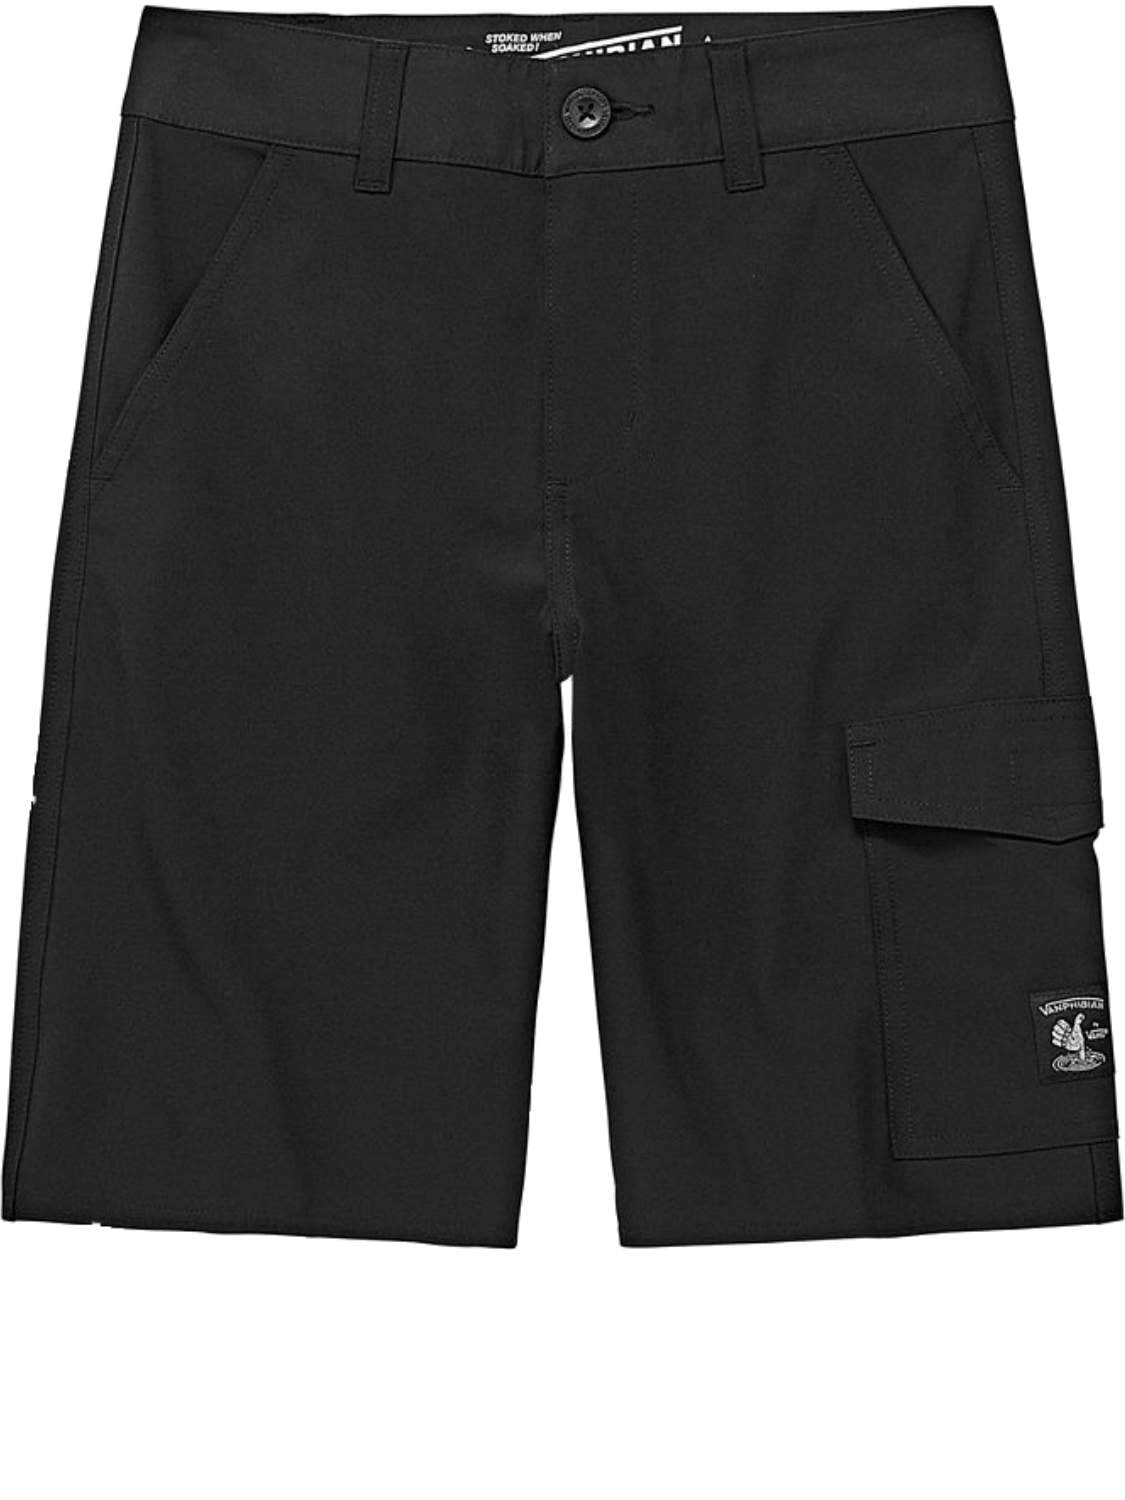 vanphibian board shorts